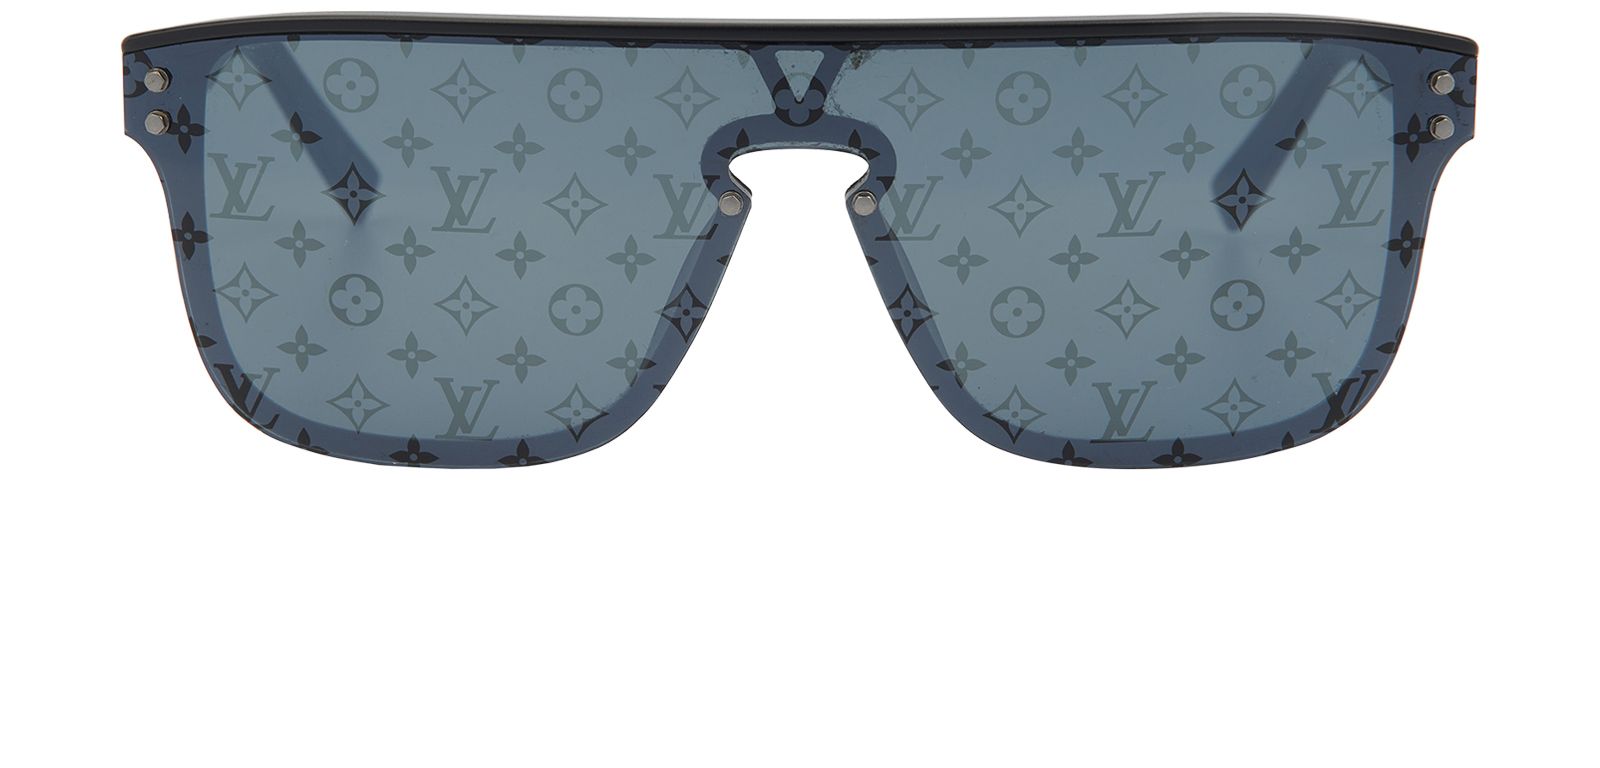 Louis Vuitton Z1082E LV Waimea Sunglasses, Sunglasses - Designer Exchange